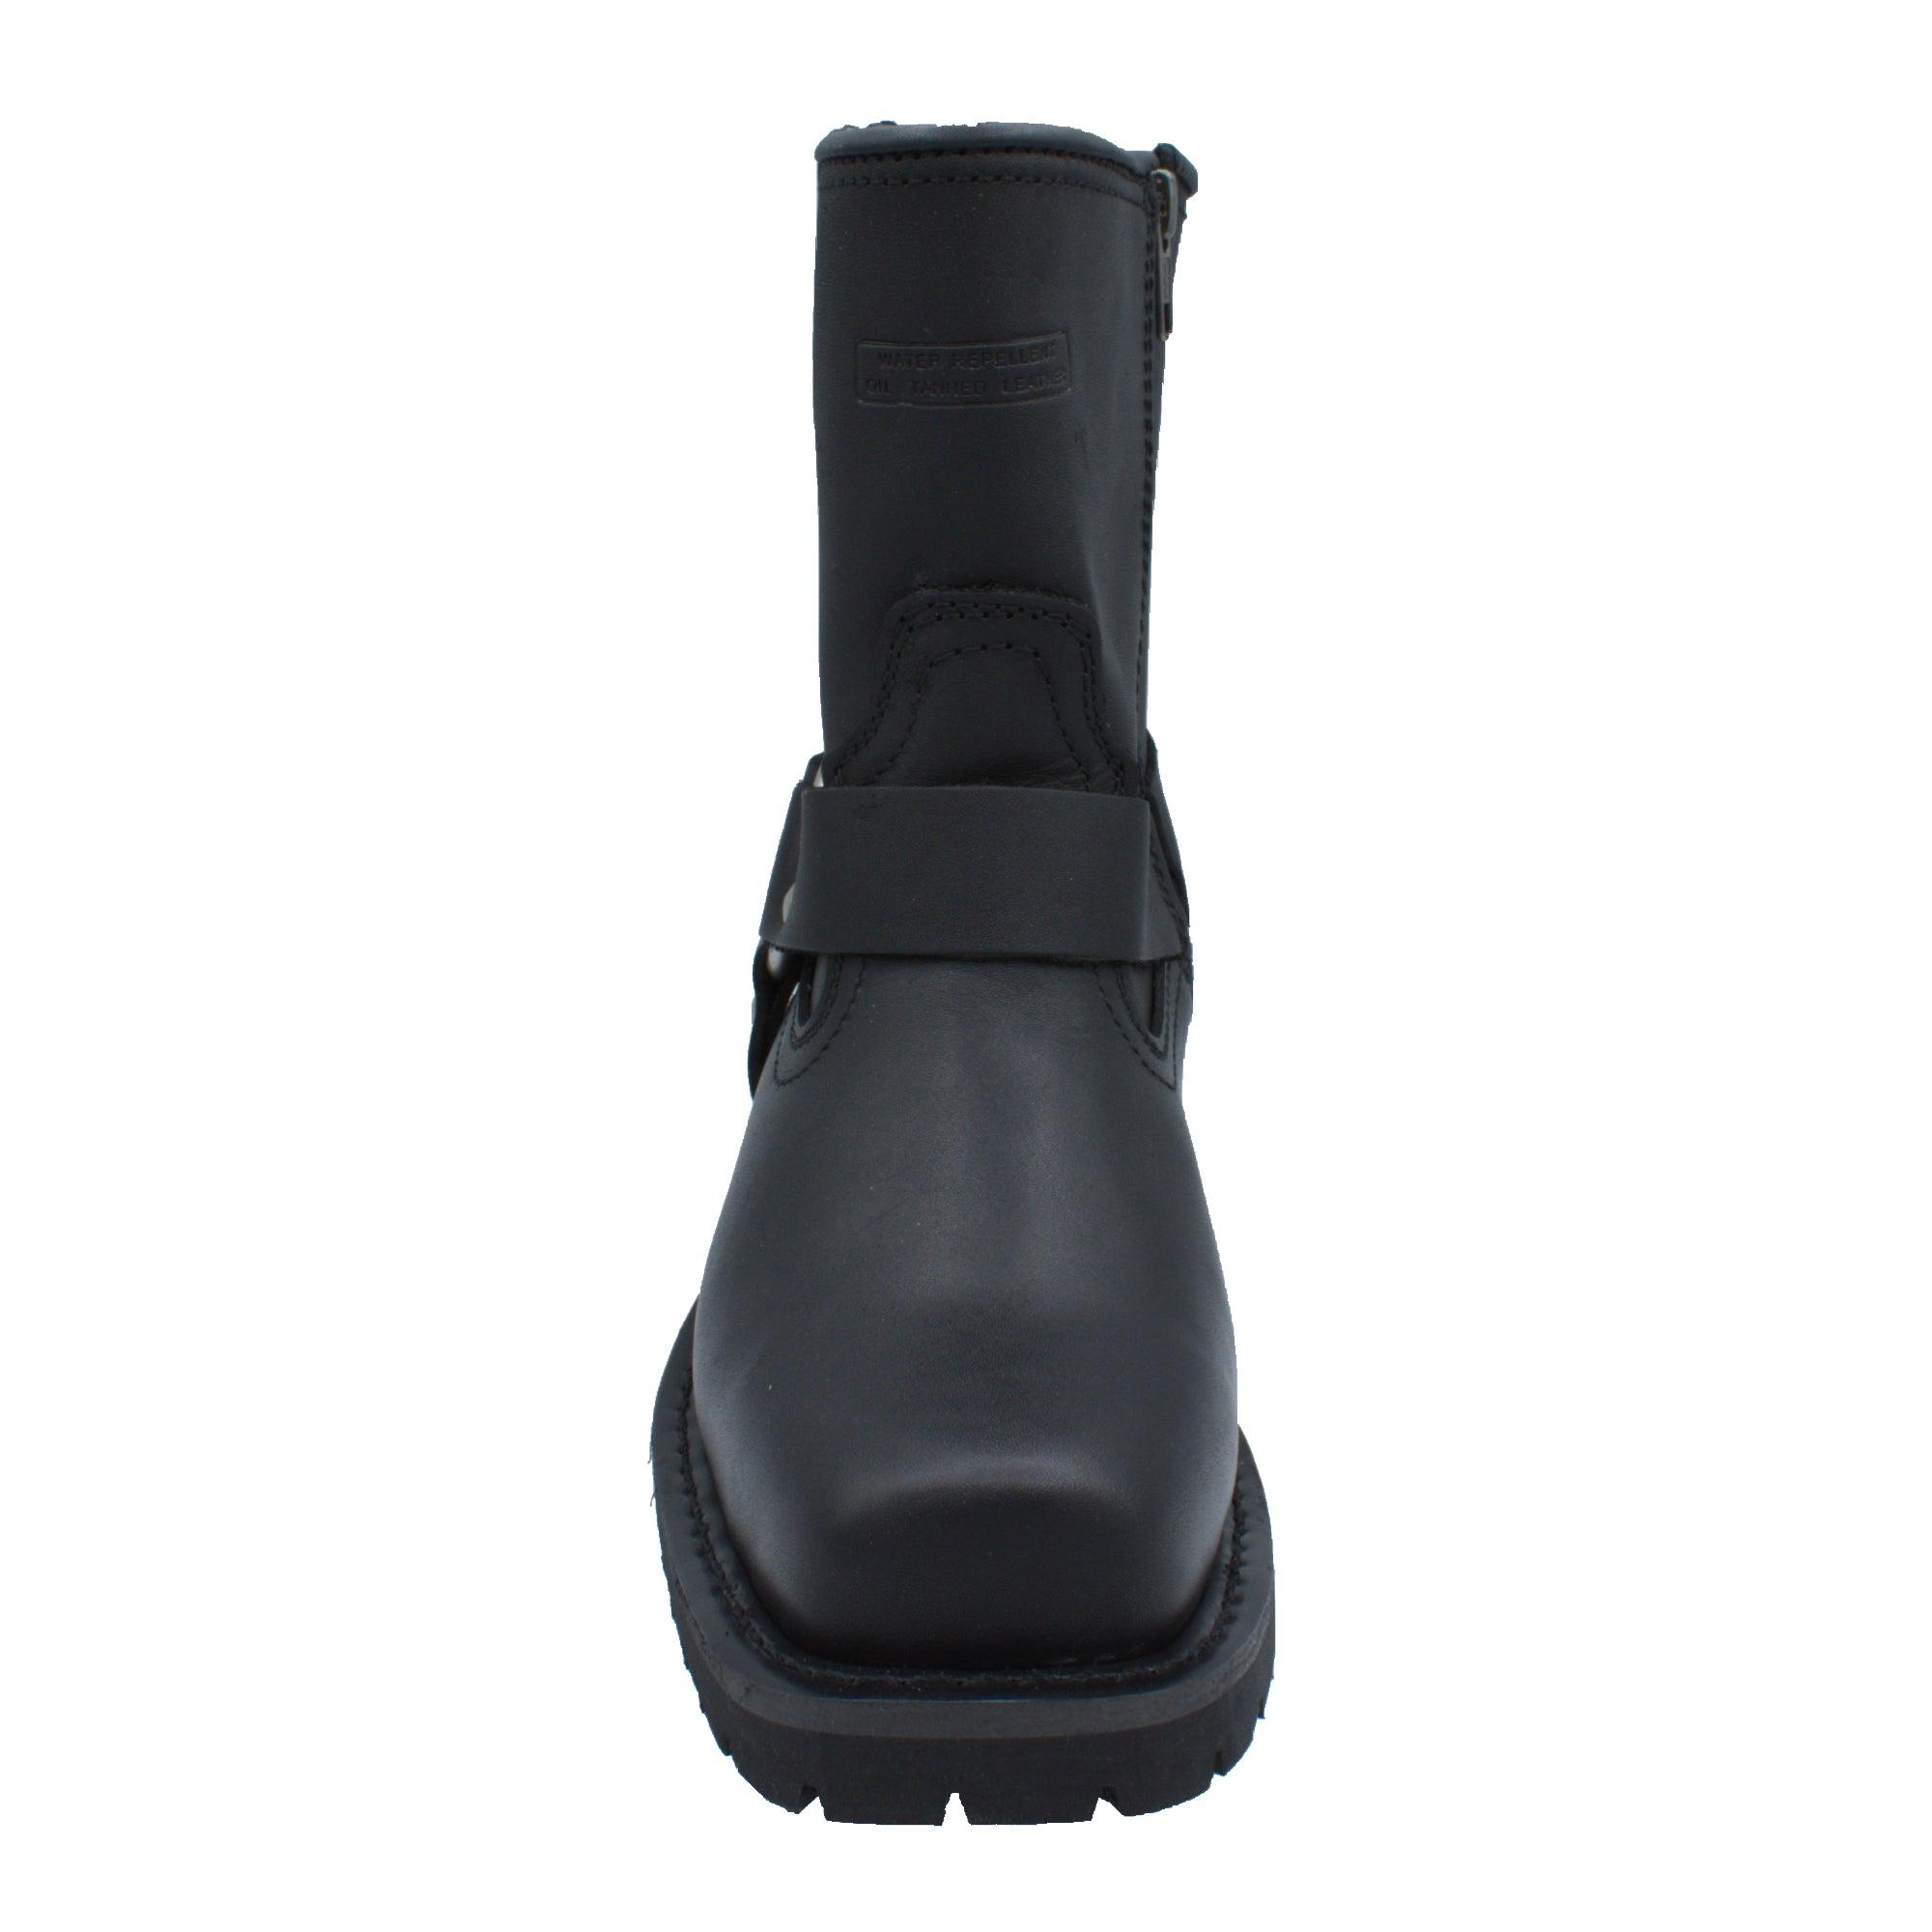 RideTecs 2436 Women's 7" Side Zipper Harness Boot Black - Flyclothing LLC